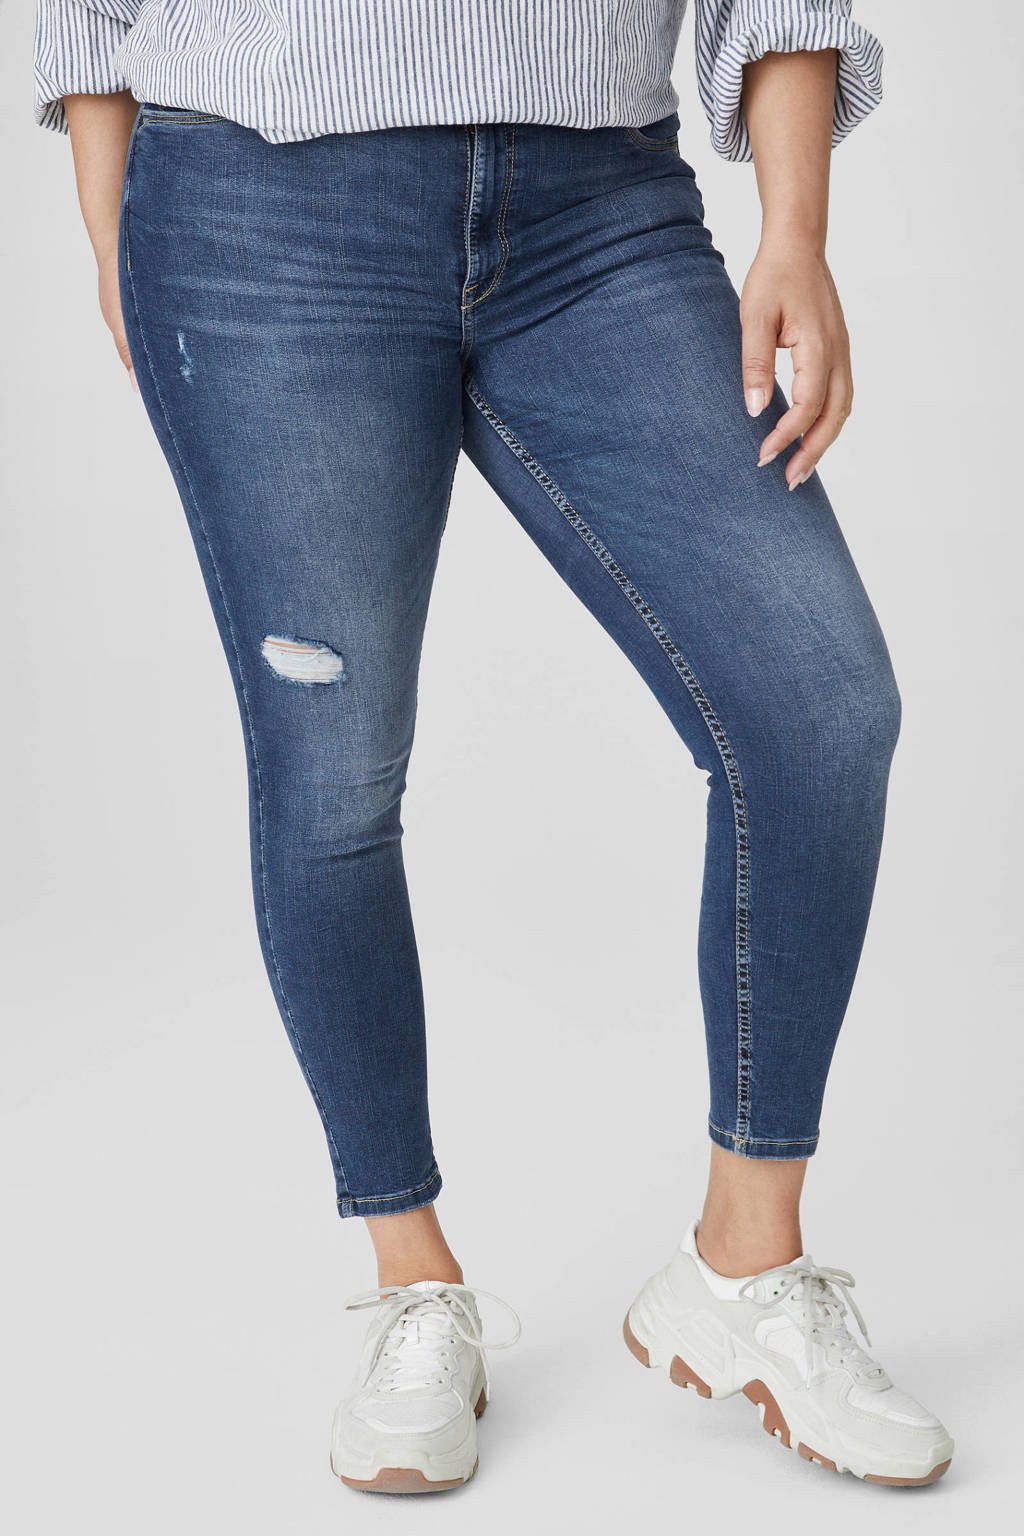 C&A The Denim high waist skinny jeans blauw, Blauw